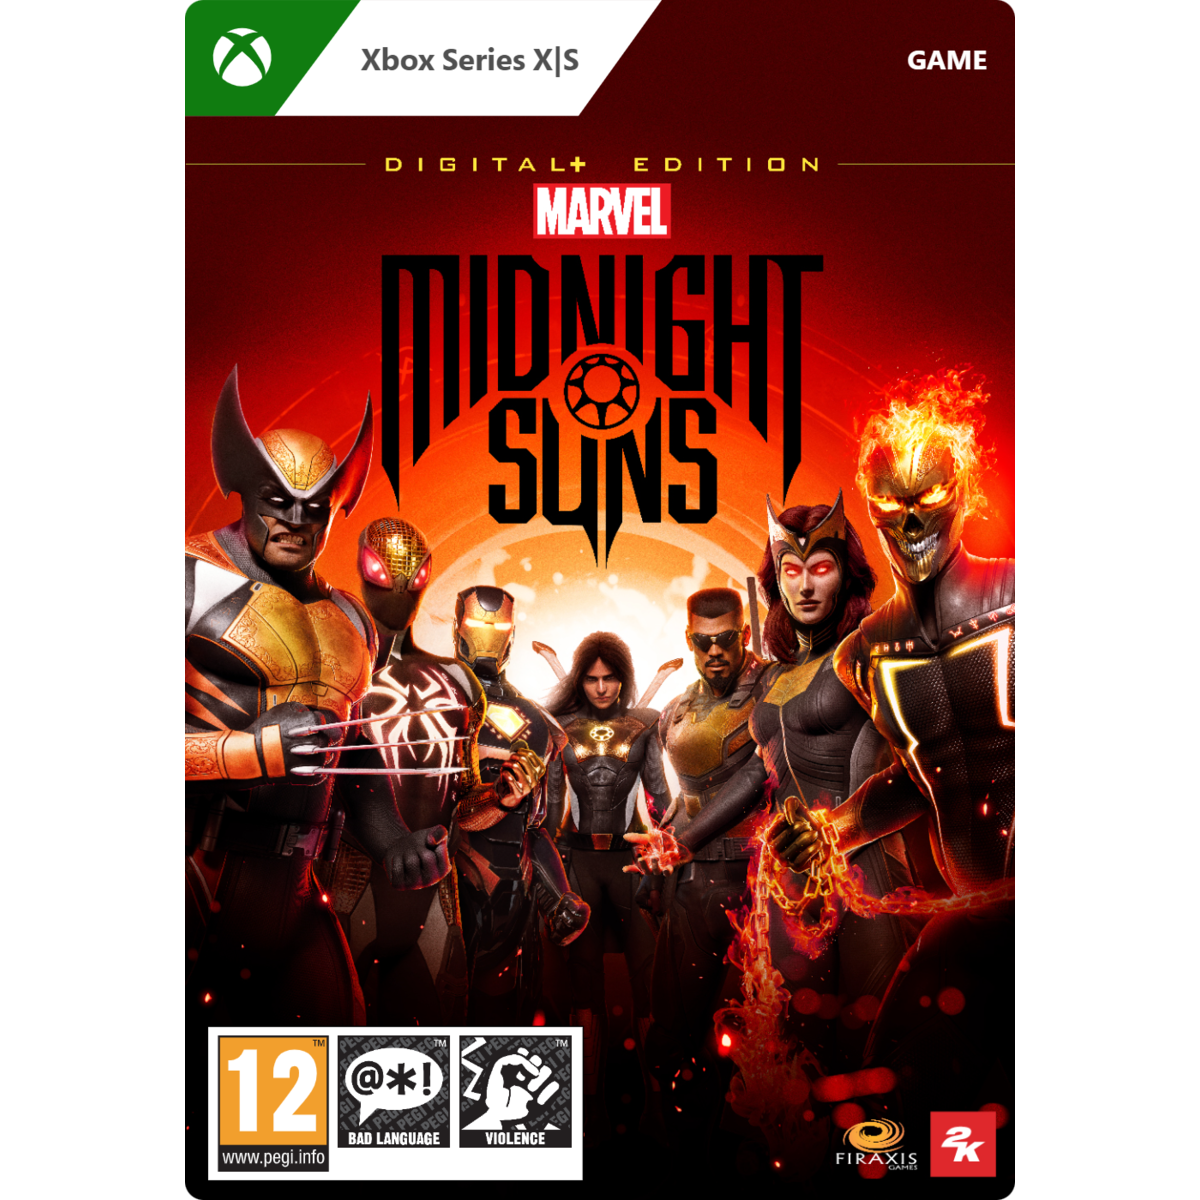 Marvel's Midnight Suns (Digital+ Edition) - Xbox